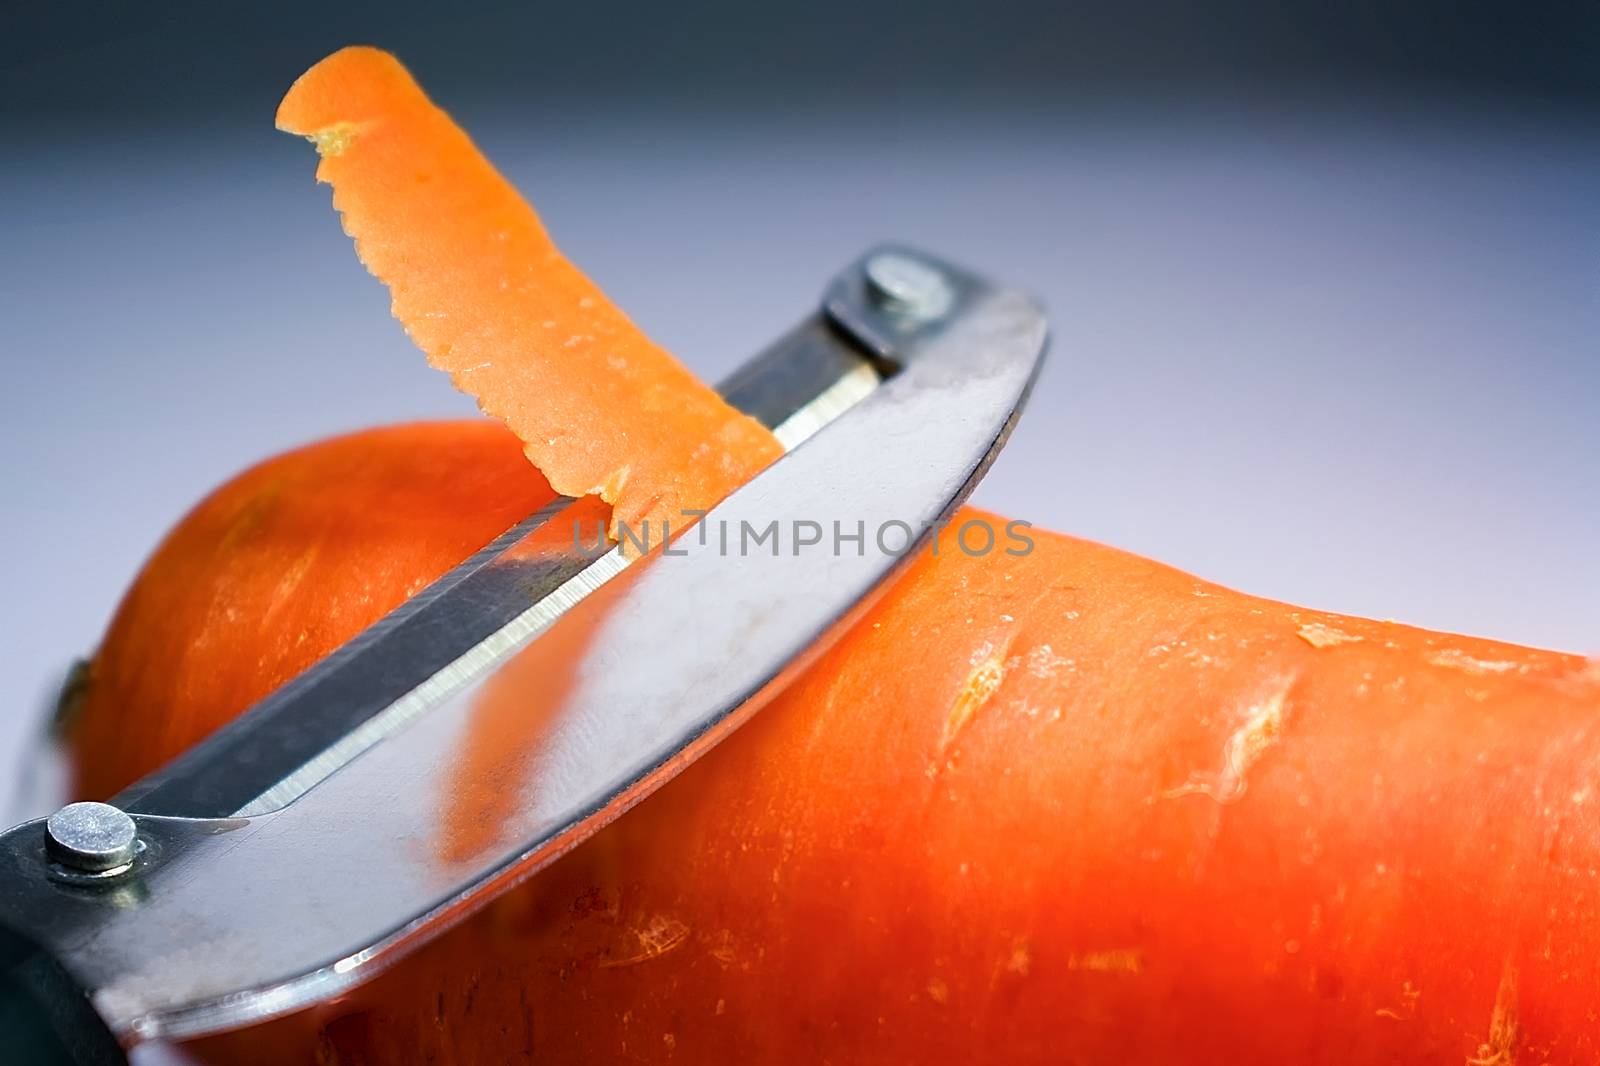 Peeler Peeling the Skin Off a Fresh Carrot